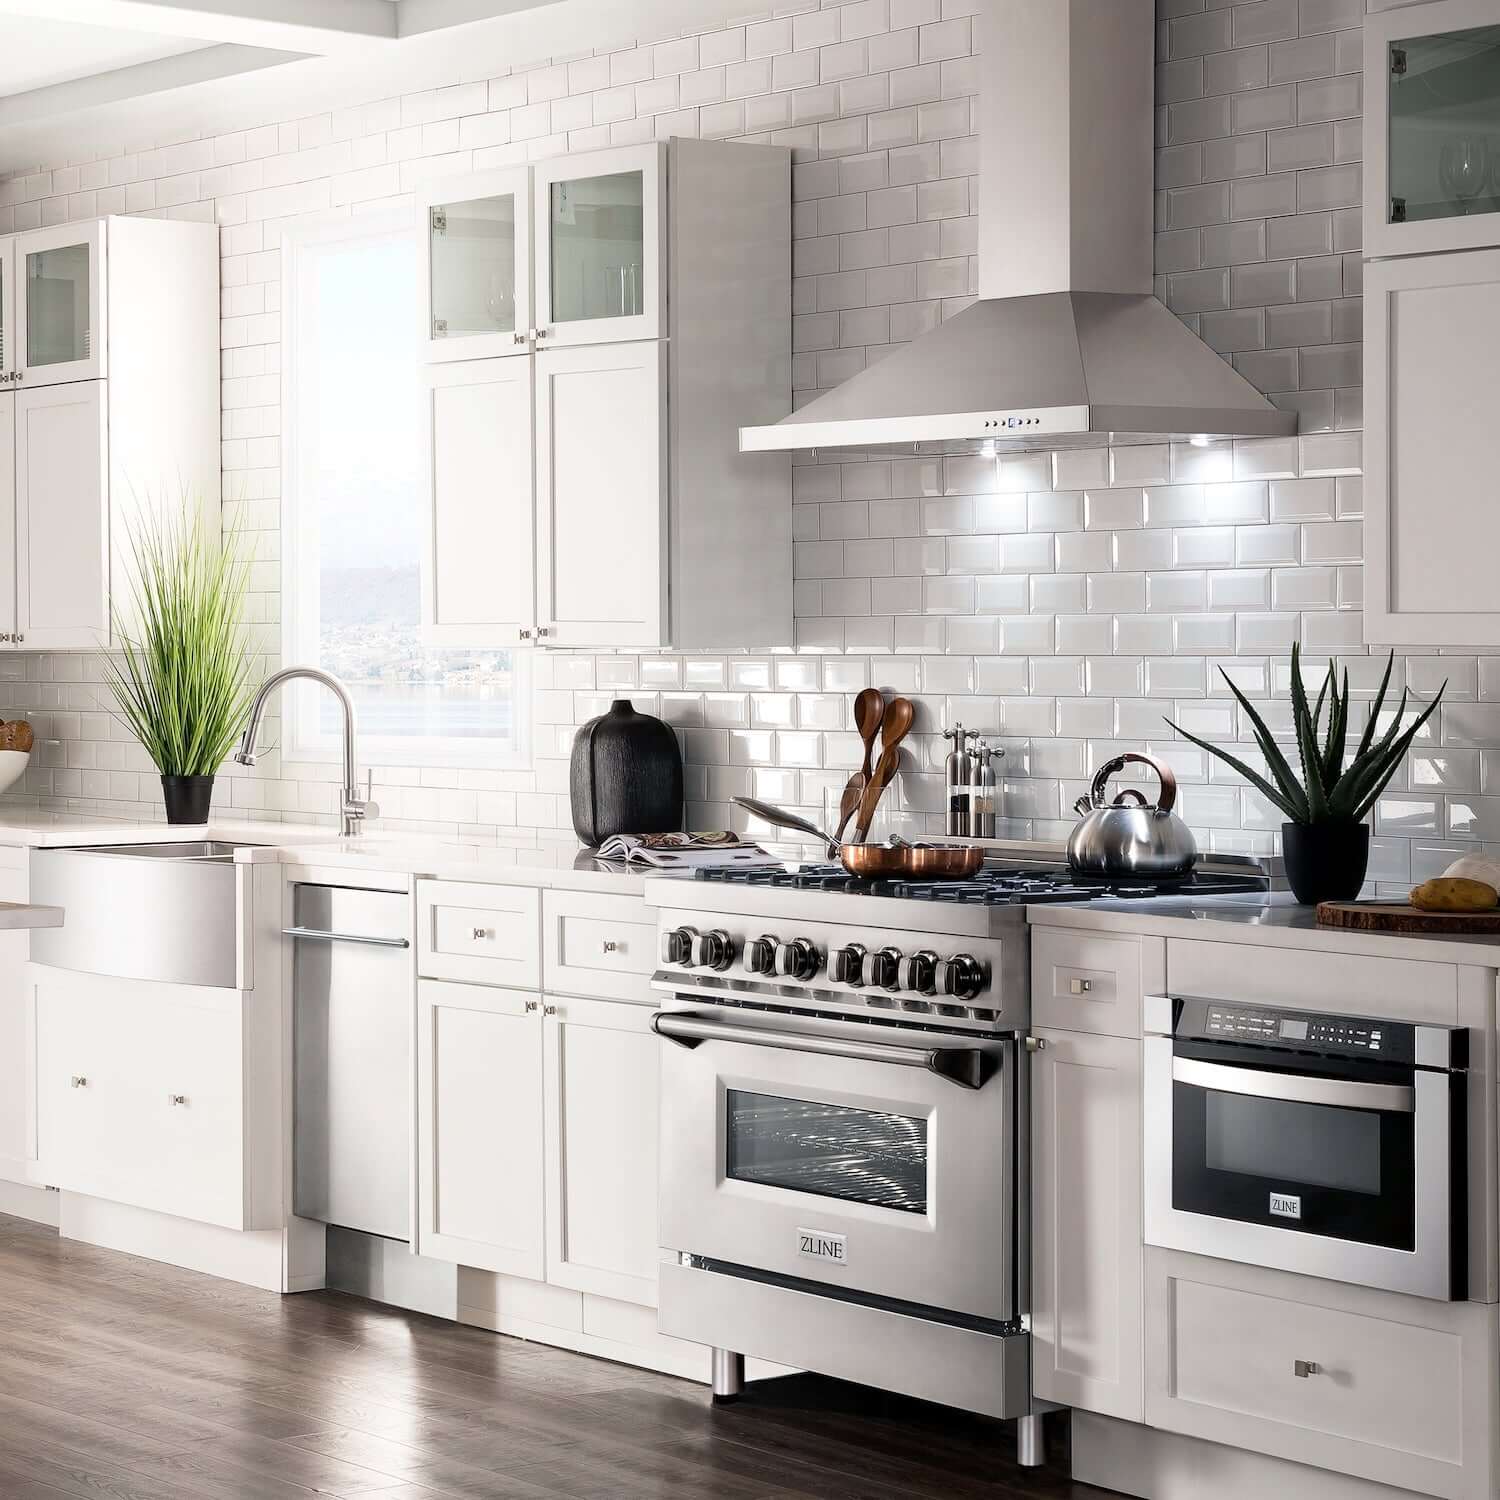 ZLINE range hood, range, microwave drawer, dishwasher, sink, and faucet in white cottage-style kitchen.